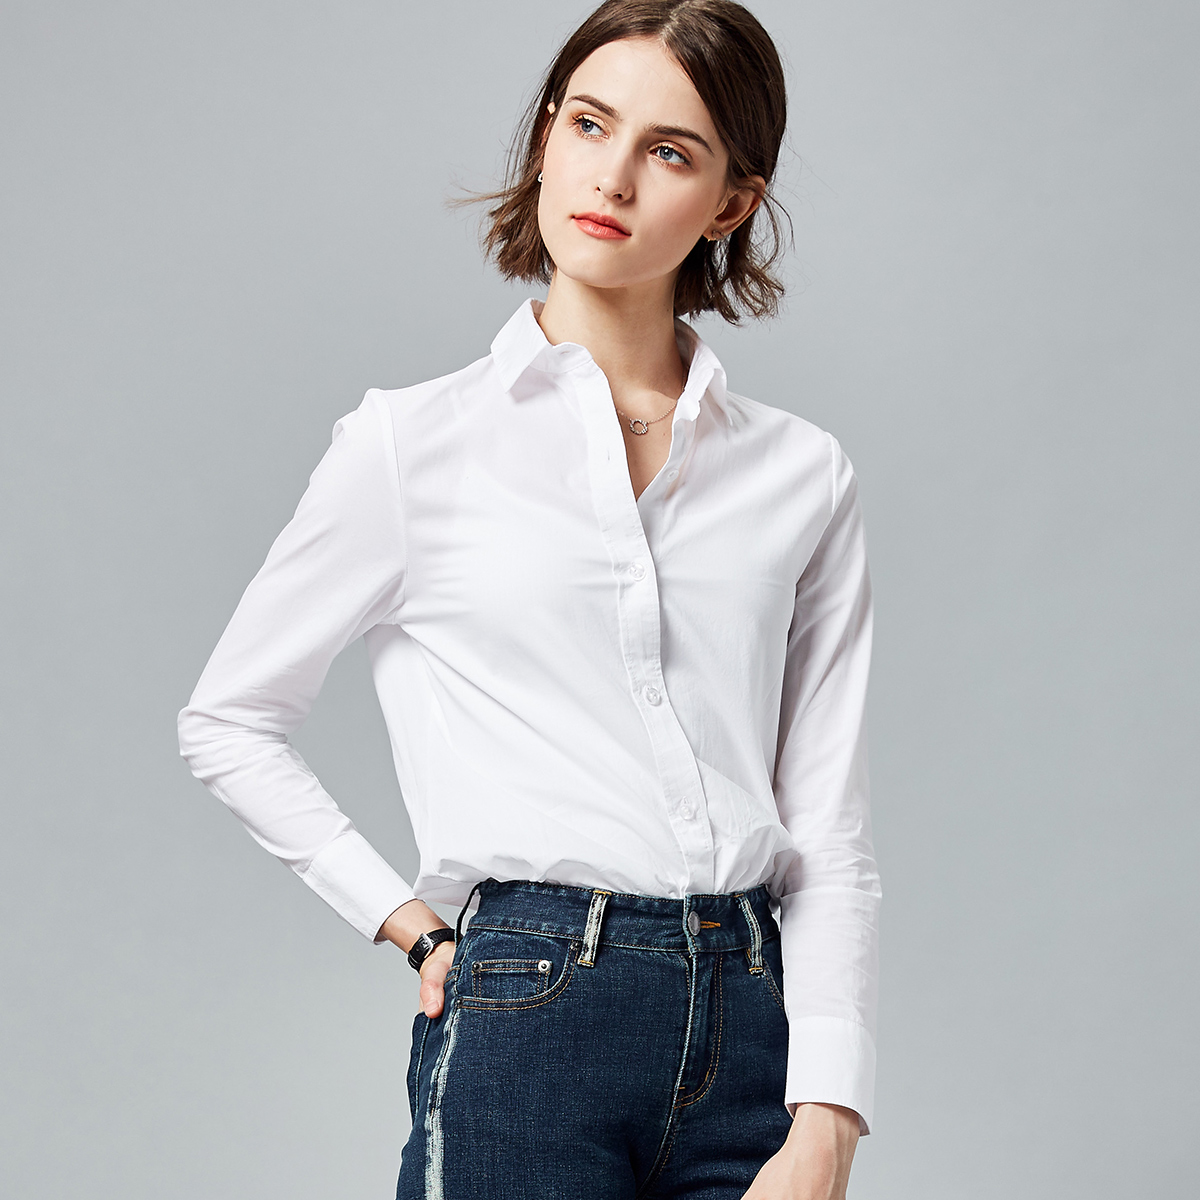 Women's long-sleeved top